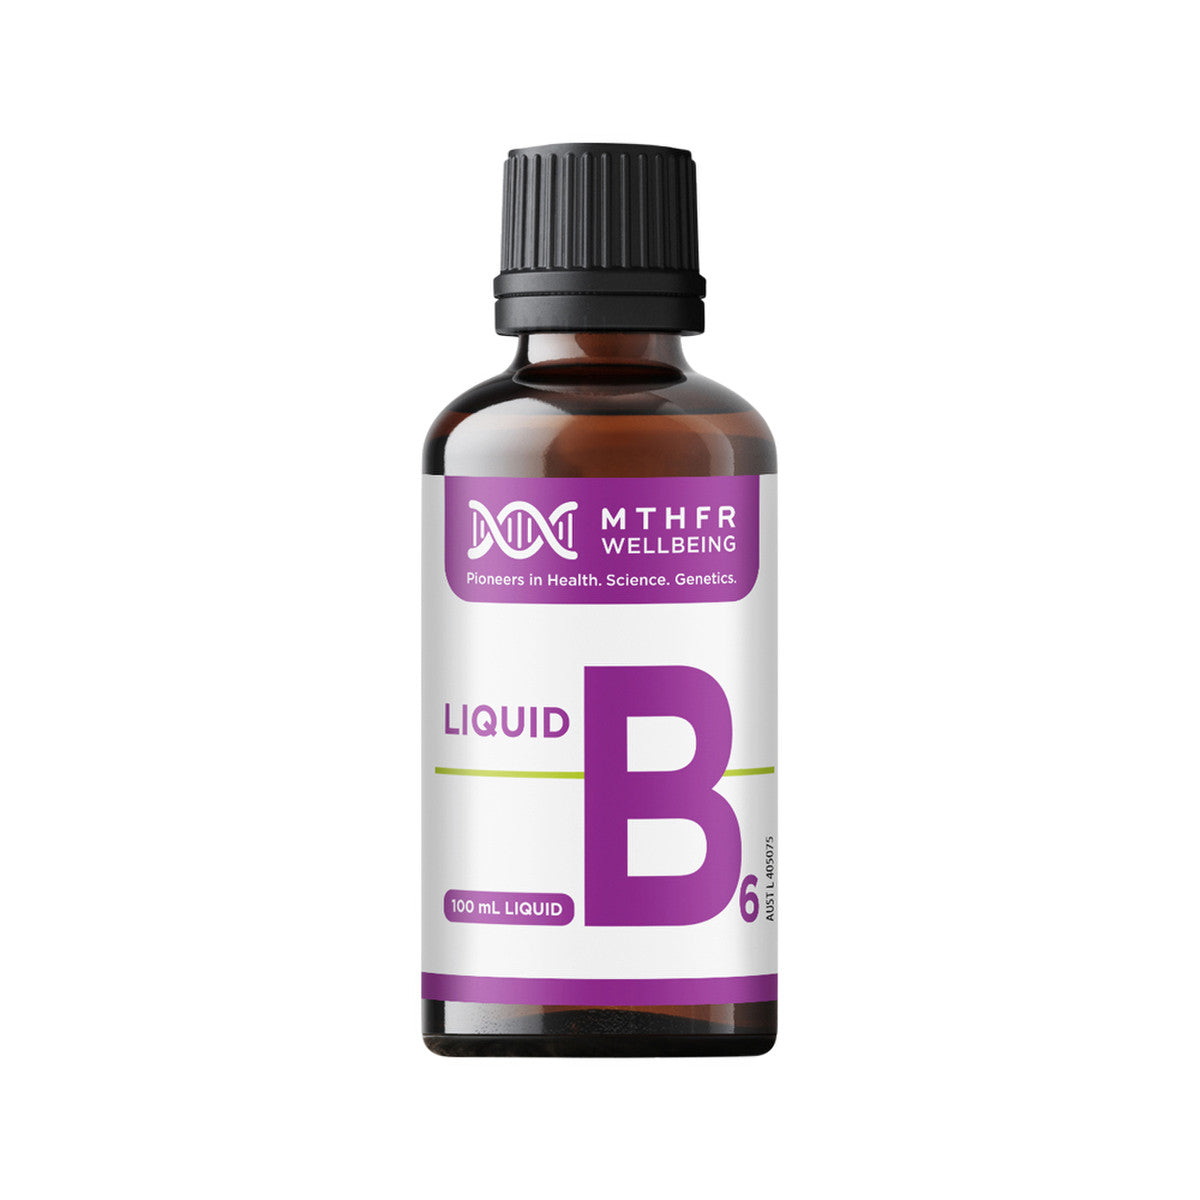 Mthfr Wellbeing - B6 Liquid